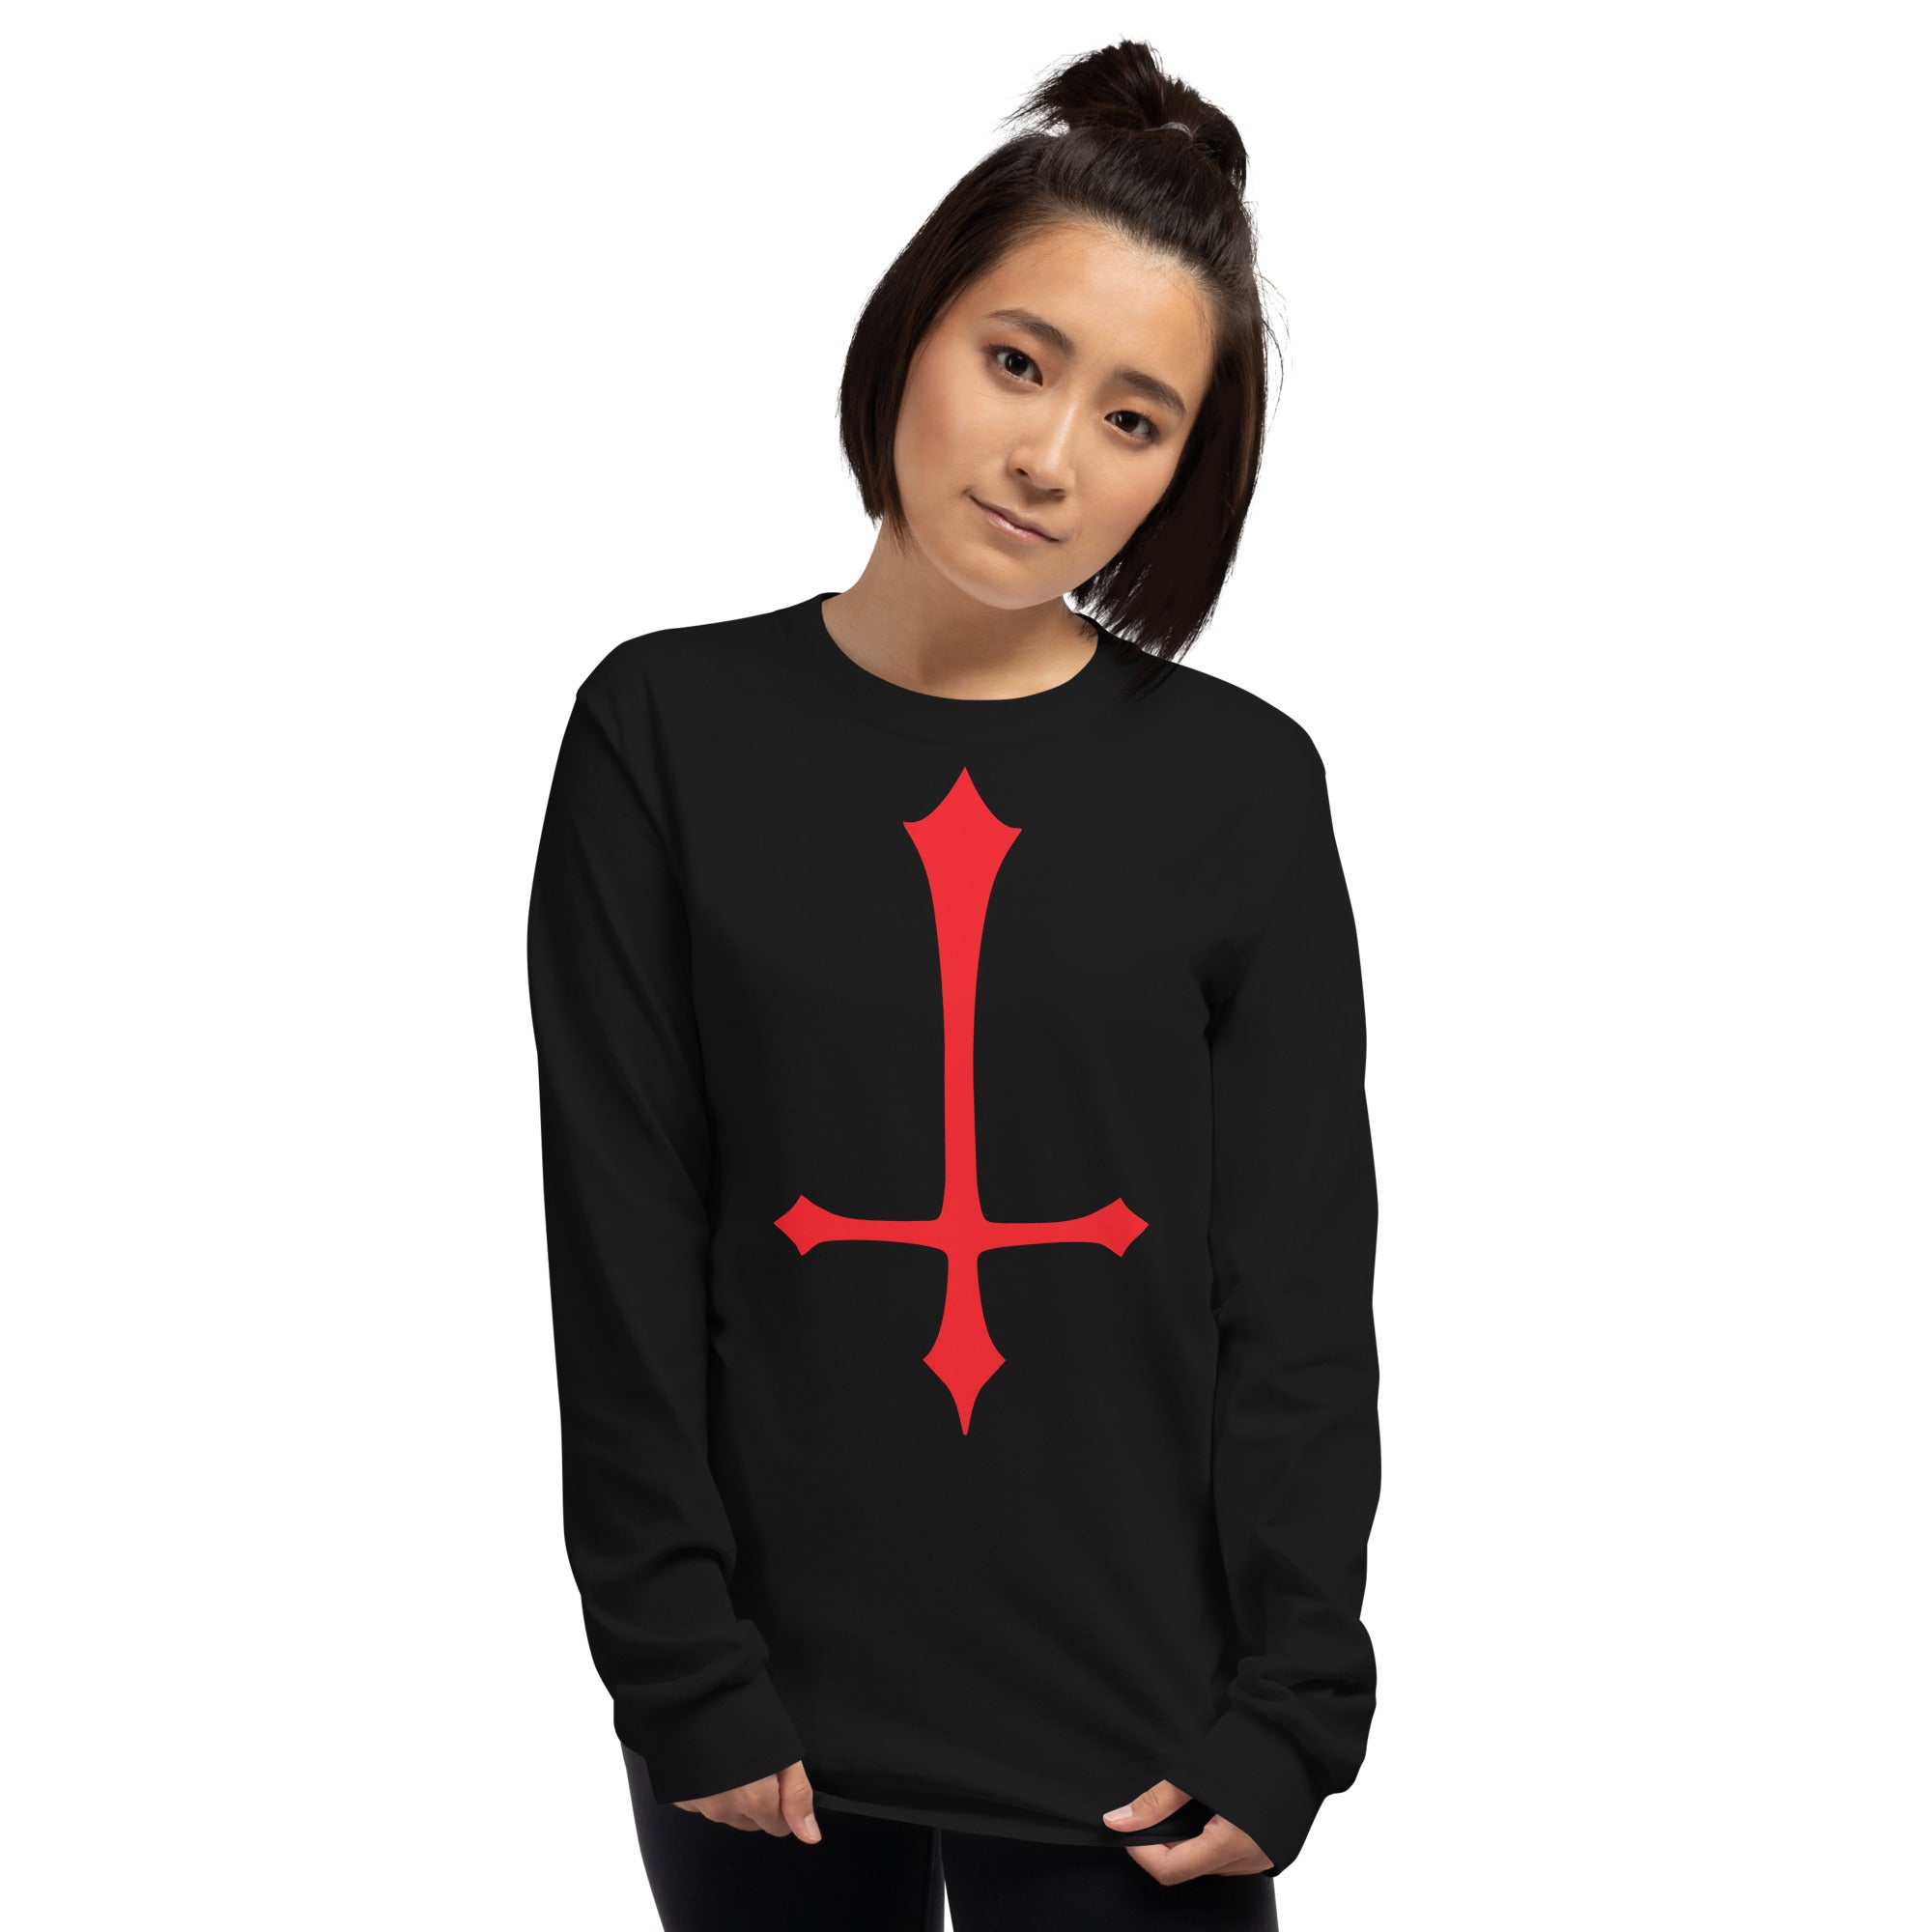 Red Inverted Satanic Unholy Cross Long Sleeve Shirt